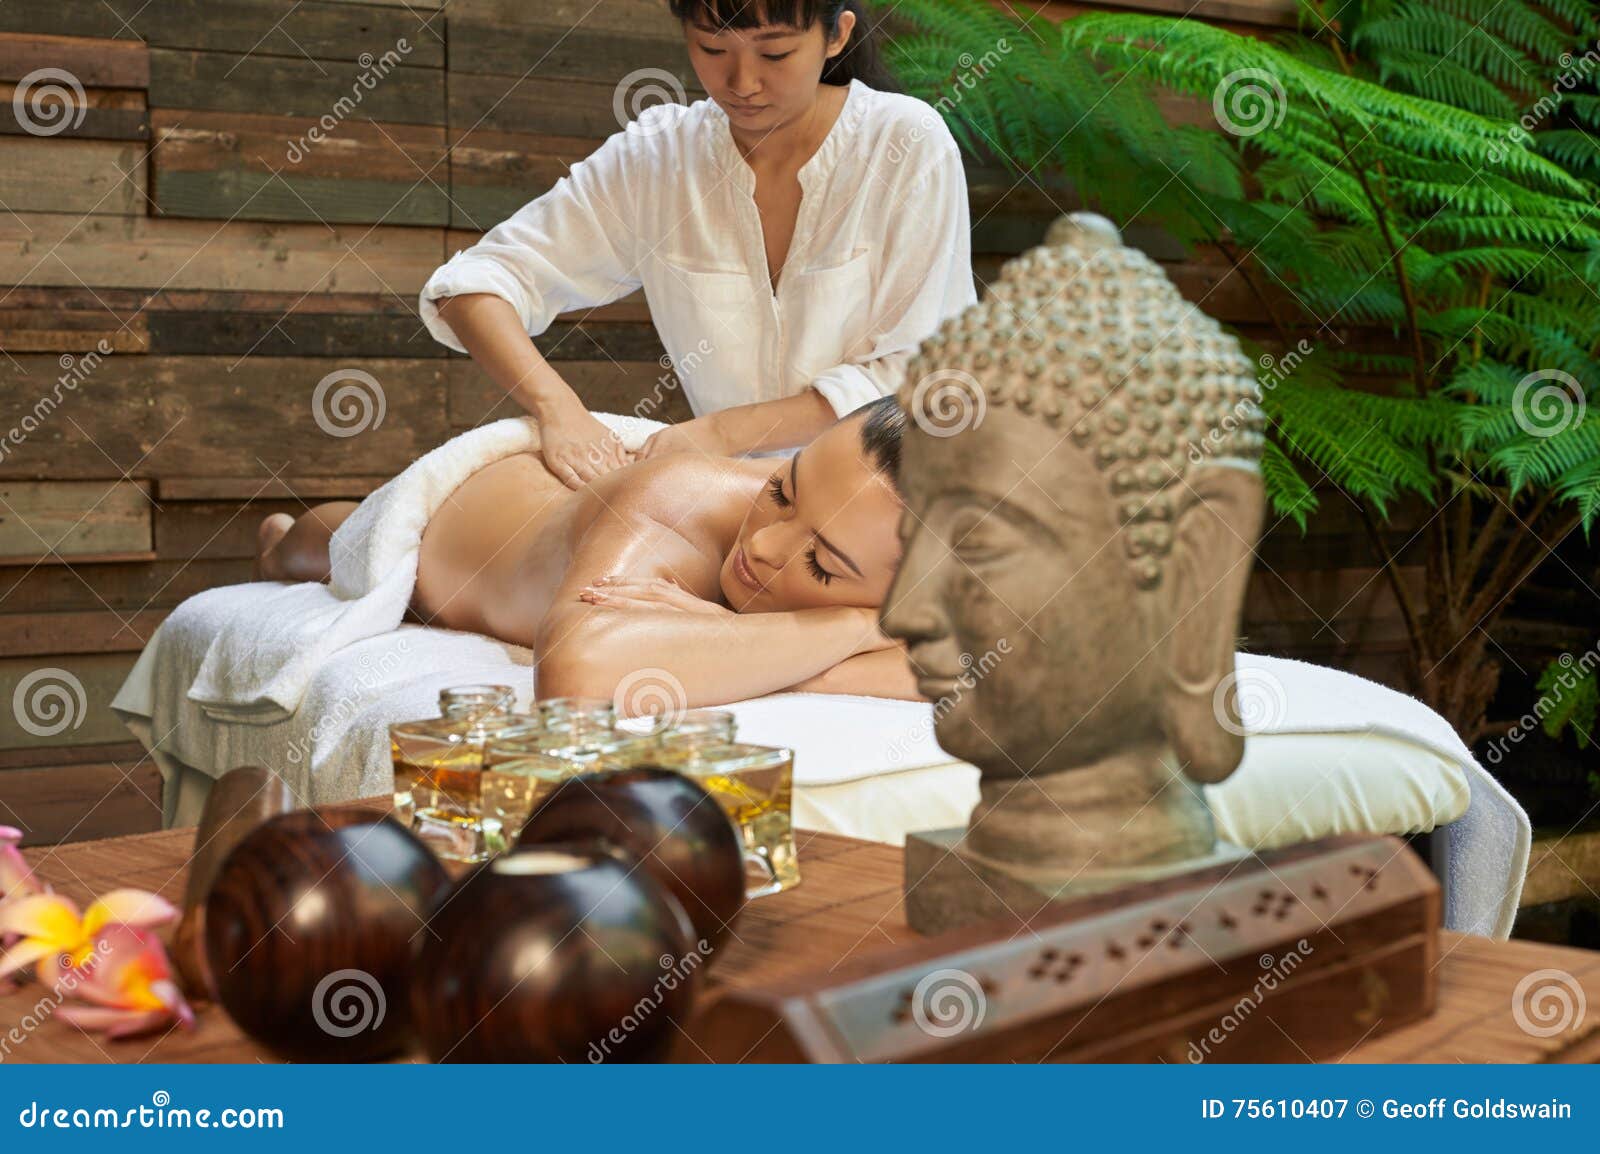 Asian Back Massage Theraphy Spa Hot Stone Stock Image Image Of